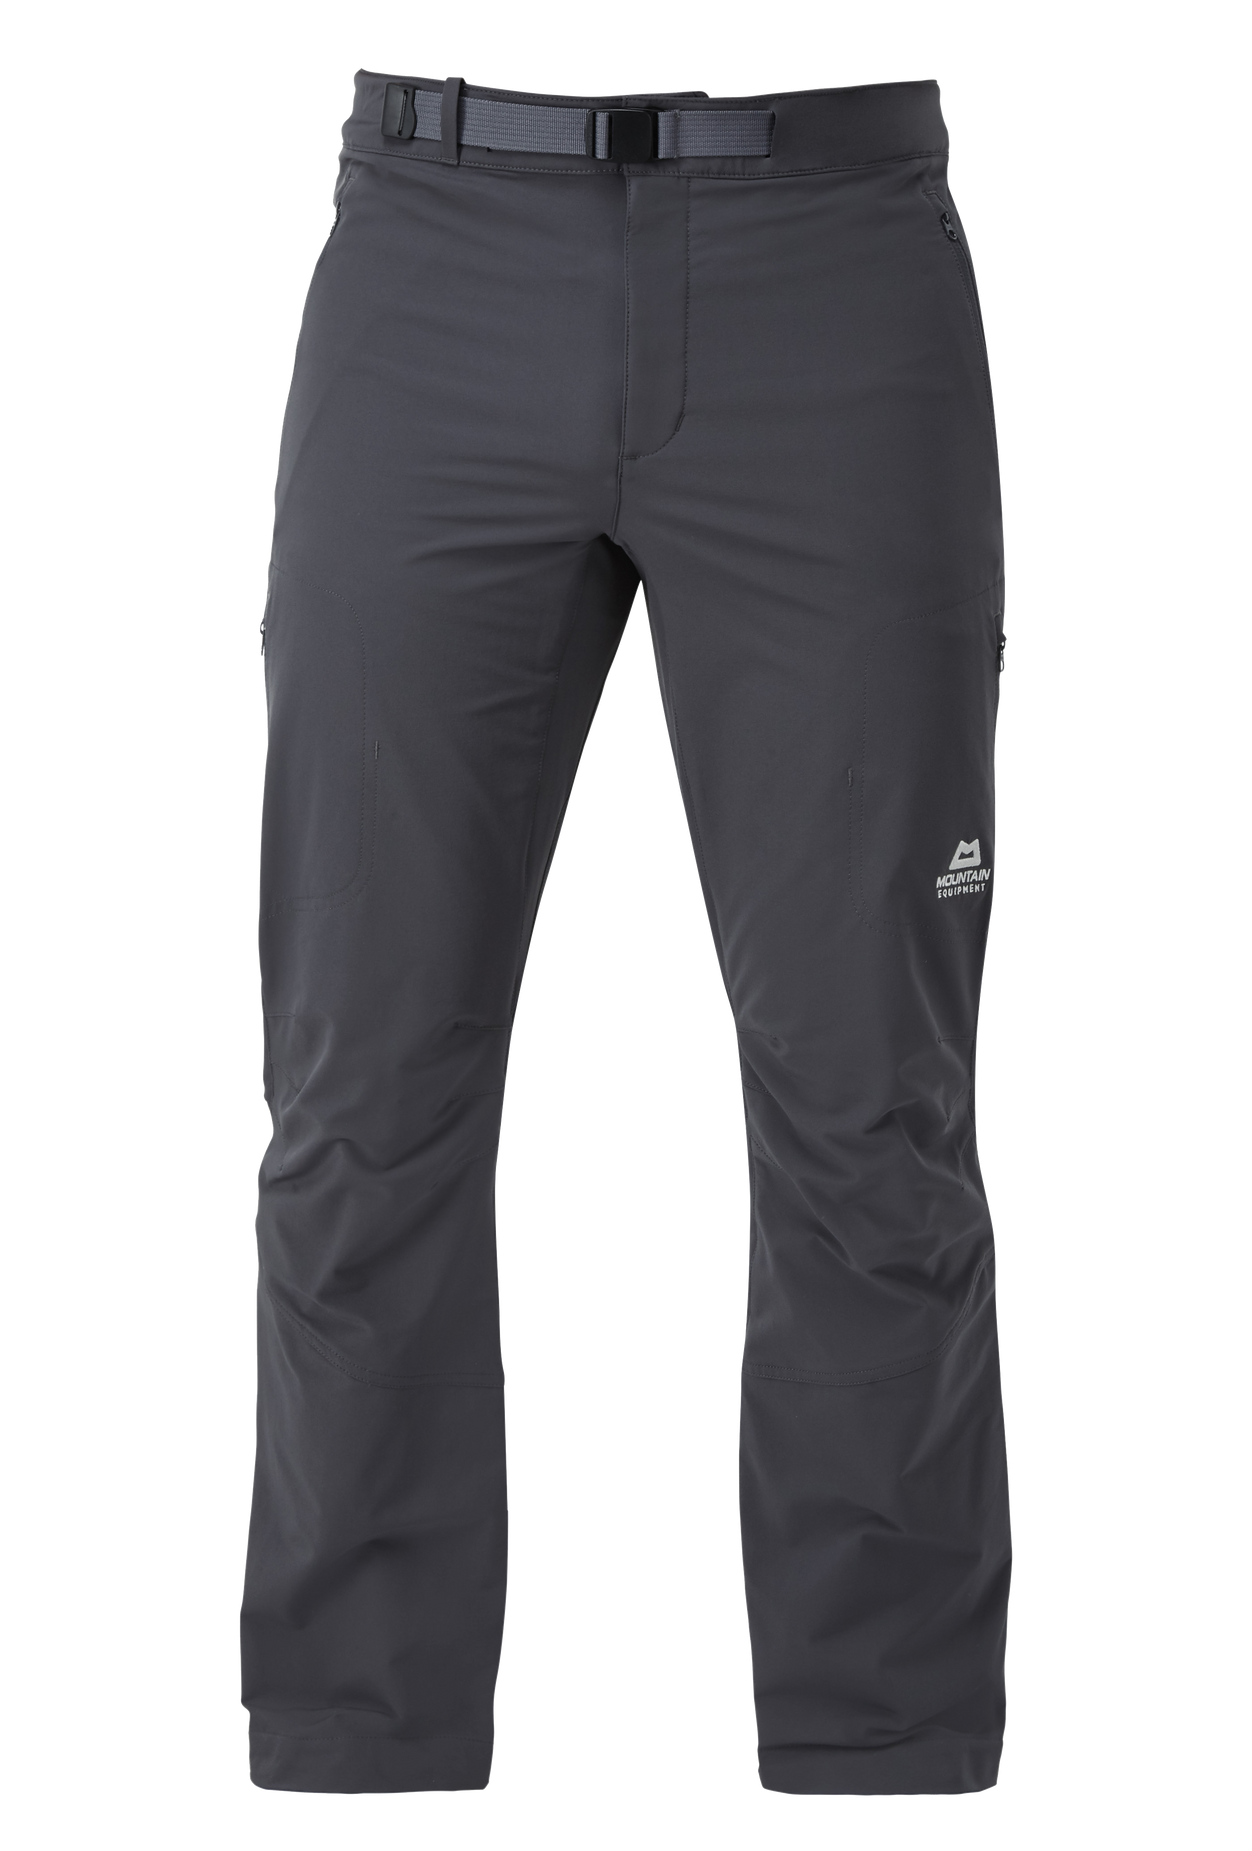 Mountain equipment pánské softshellové kalhoty Ibex Mountain Mens Pant - prodloužené Barva: Anvil Grey, Velikost: 30/S